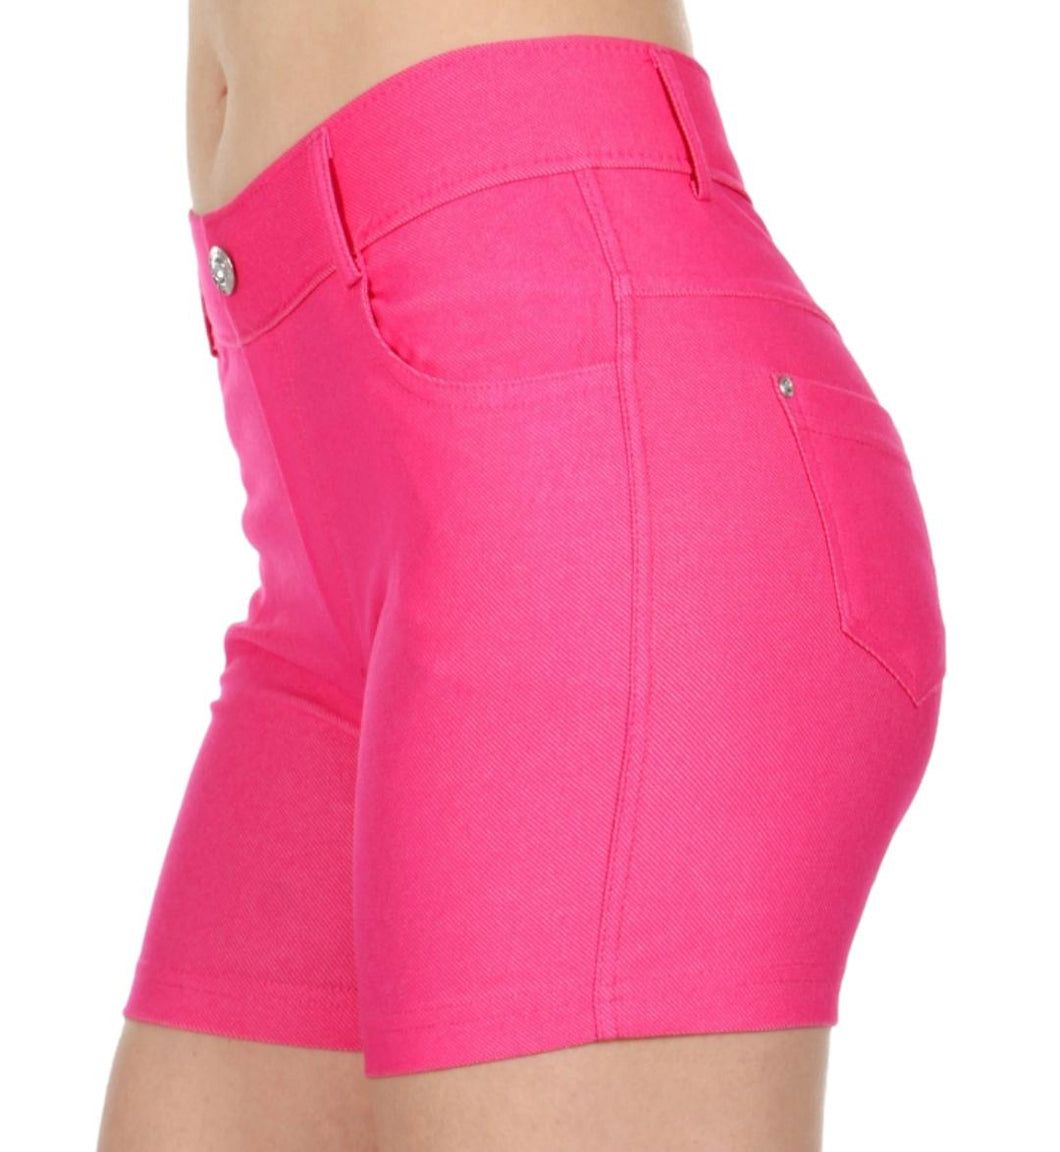 Women's Fushia Pink Stretchy Short Shorts